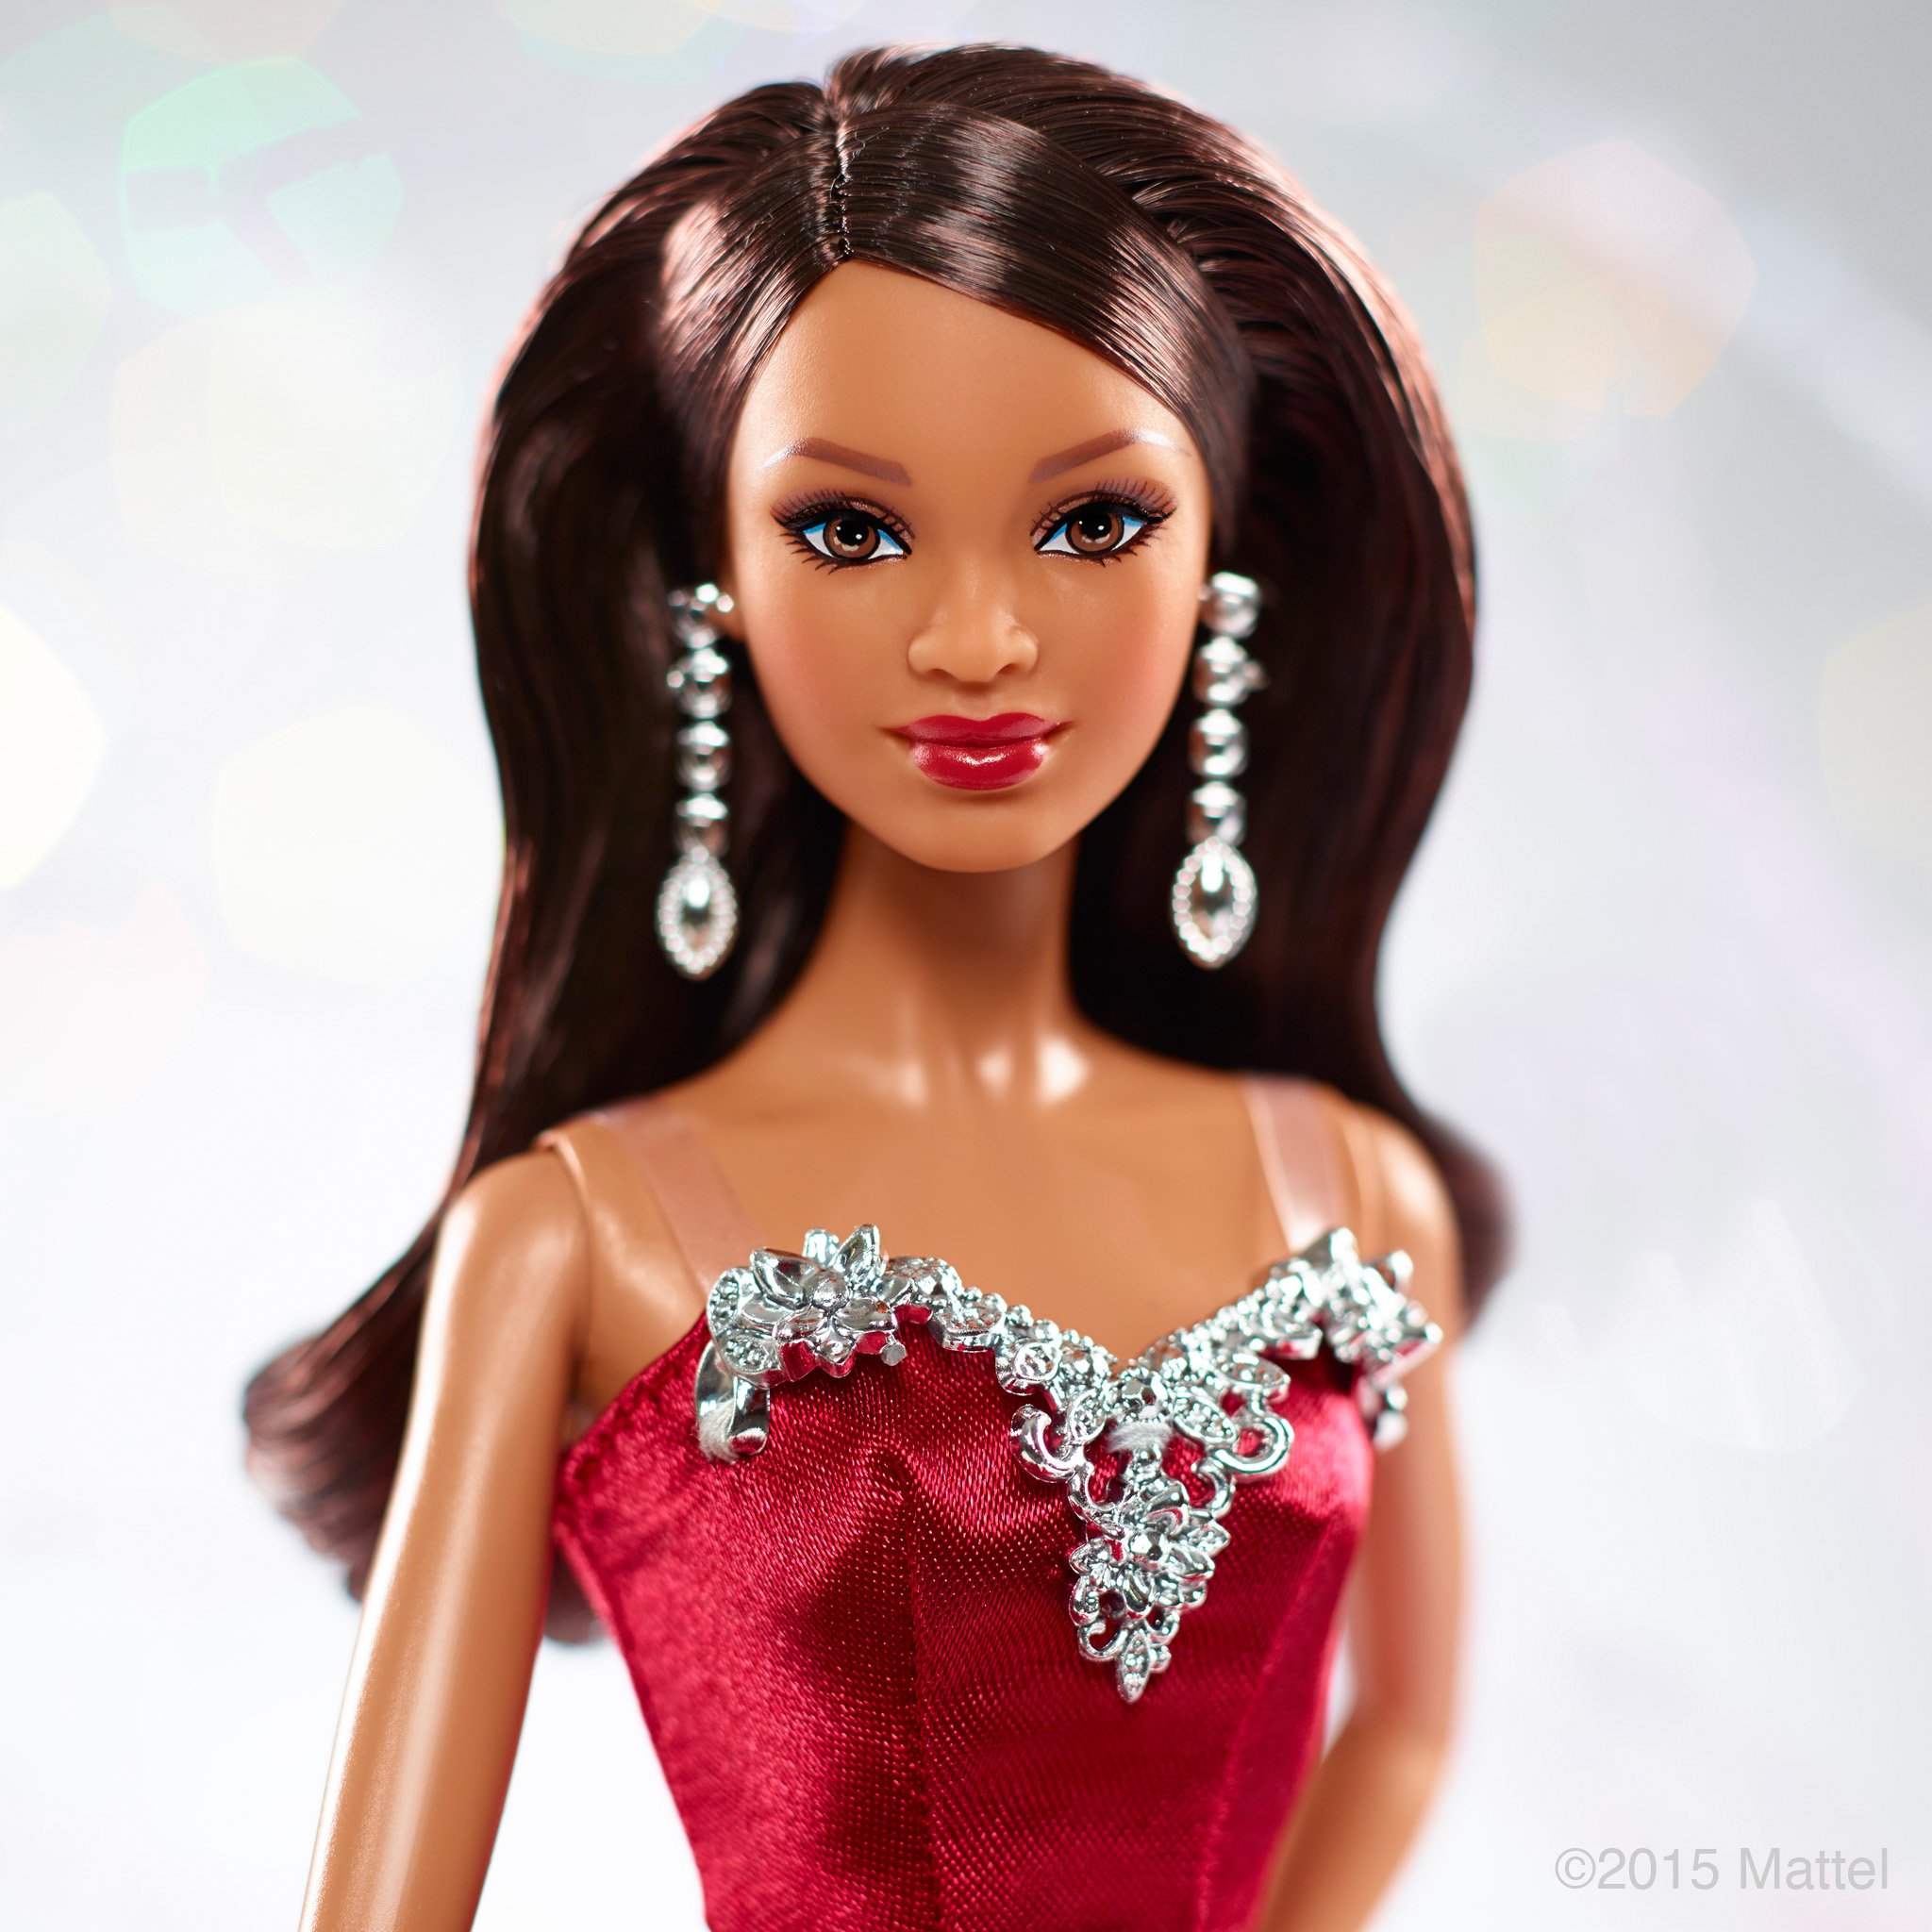 Overwegen Mammoet Blaast op Barbie on Twitter: "The 2015 Holiday Barbie doll brings a little glamour to  the season. Get yours now on https://t.co/oJUDI5HvEA!  https://t.co/nayf6etleo" / Twitter